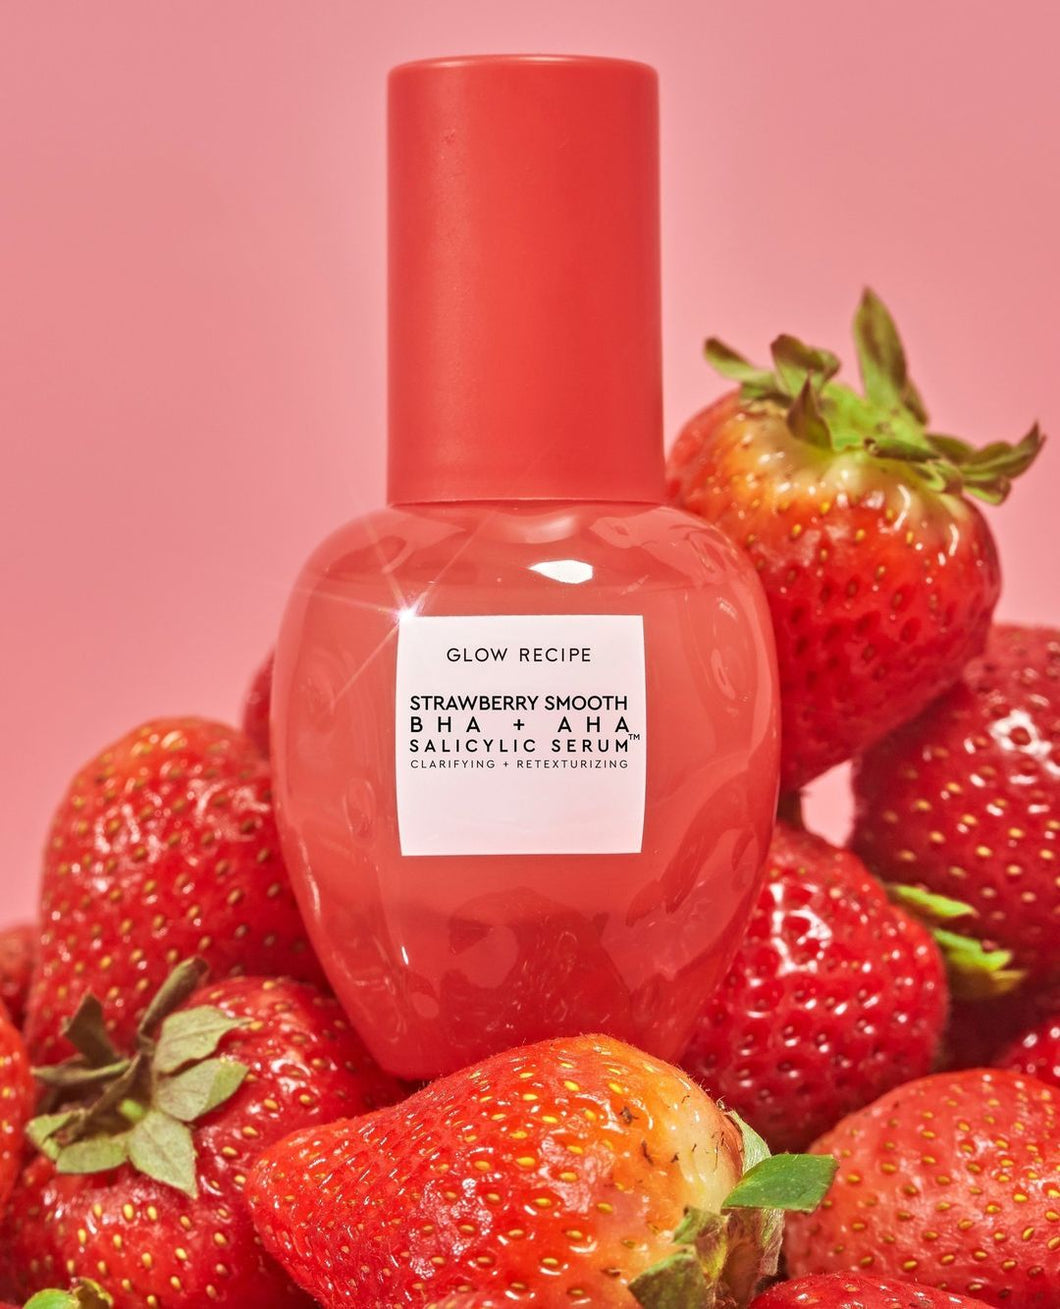 Glow Recipe Strawberry Smooth BHA + AHA Salicylic Serum 30ml